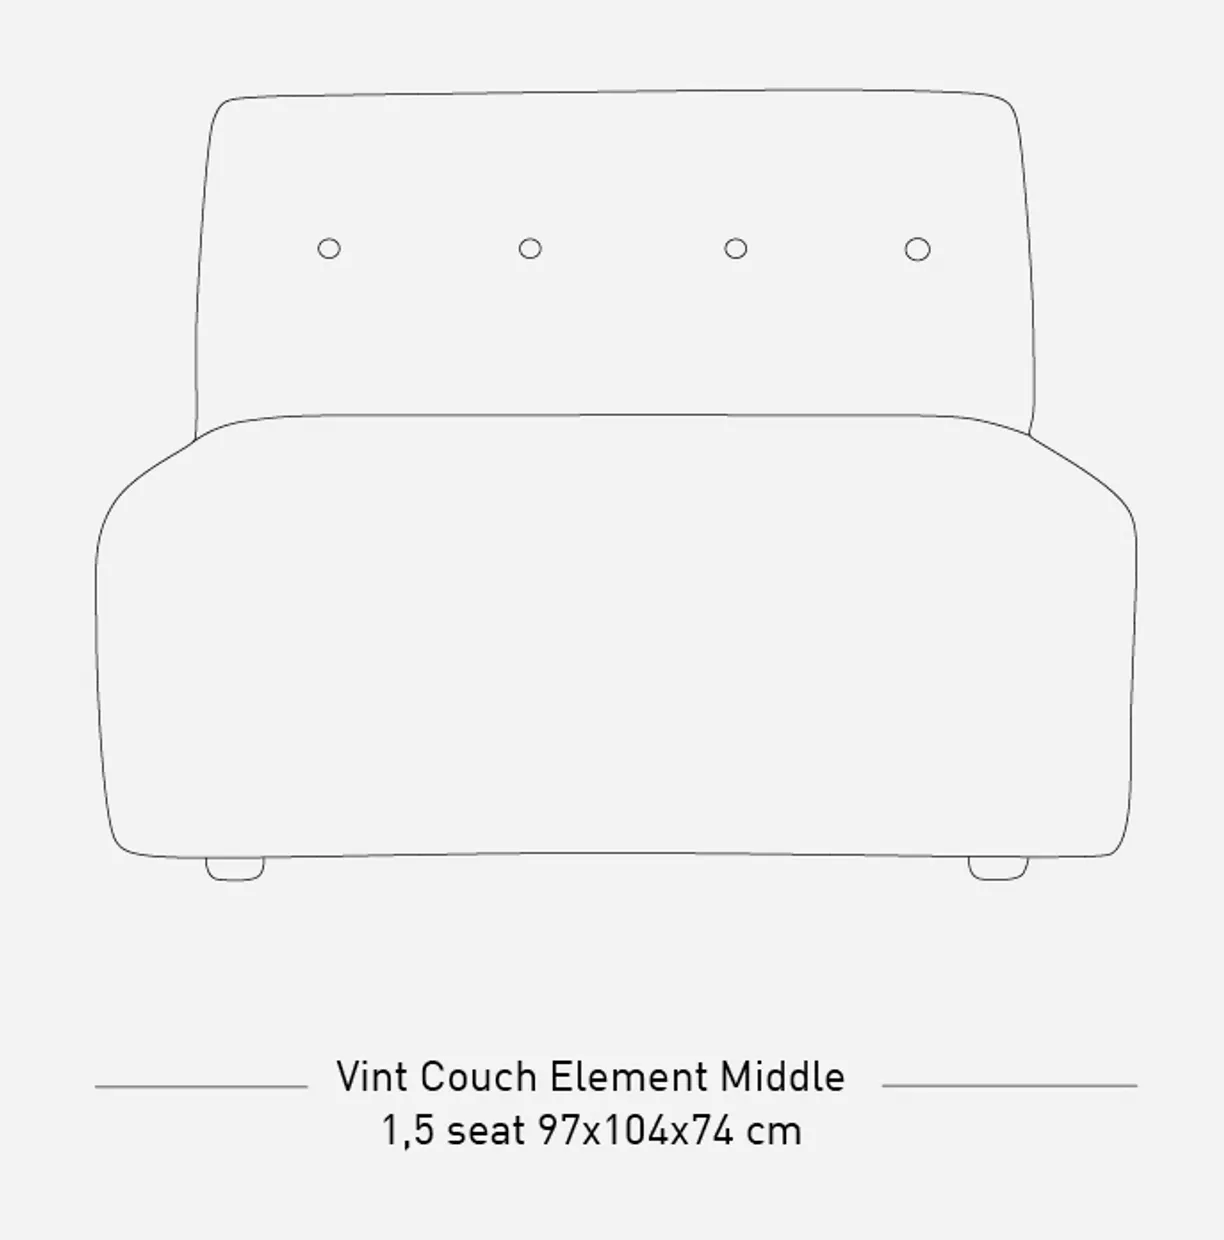 Vint couch: element middle 1,5-seat, sneak, beige